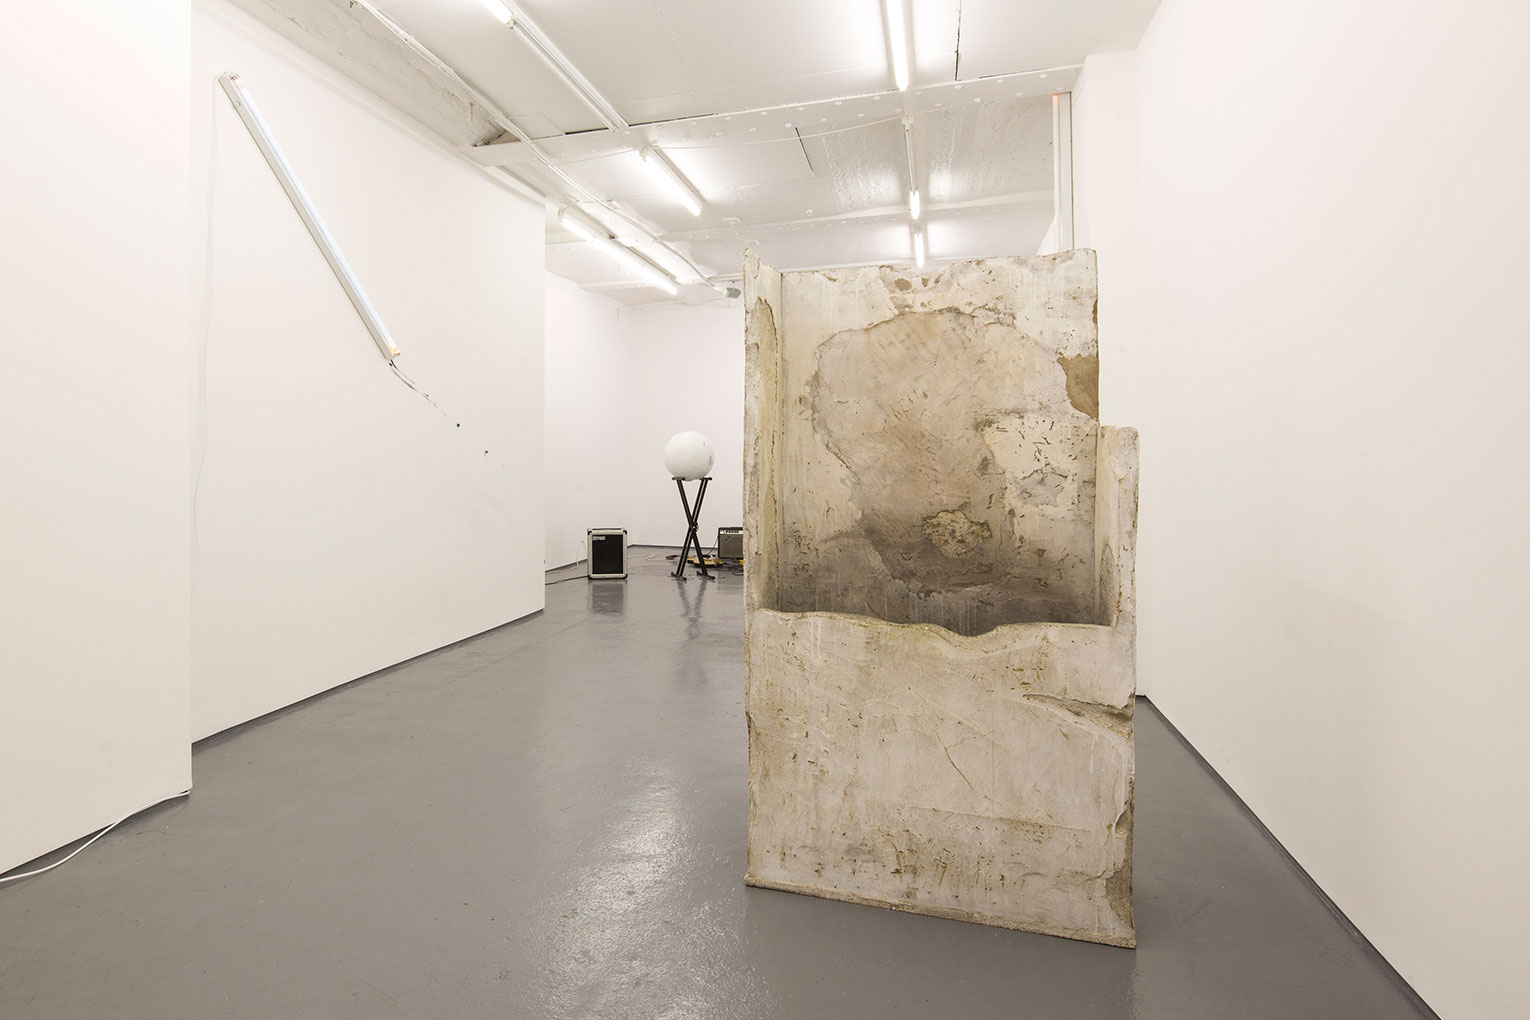 <b>Title: </b>Concrete Container, by Ana Genovés<br /><b>Year: </b>2015<br /><b>Medium: </b>Polystyrene and cement<br /><b>Size: </b>92 x 170 x 37 cm